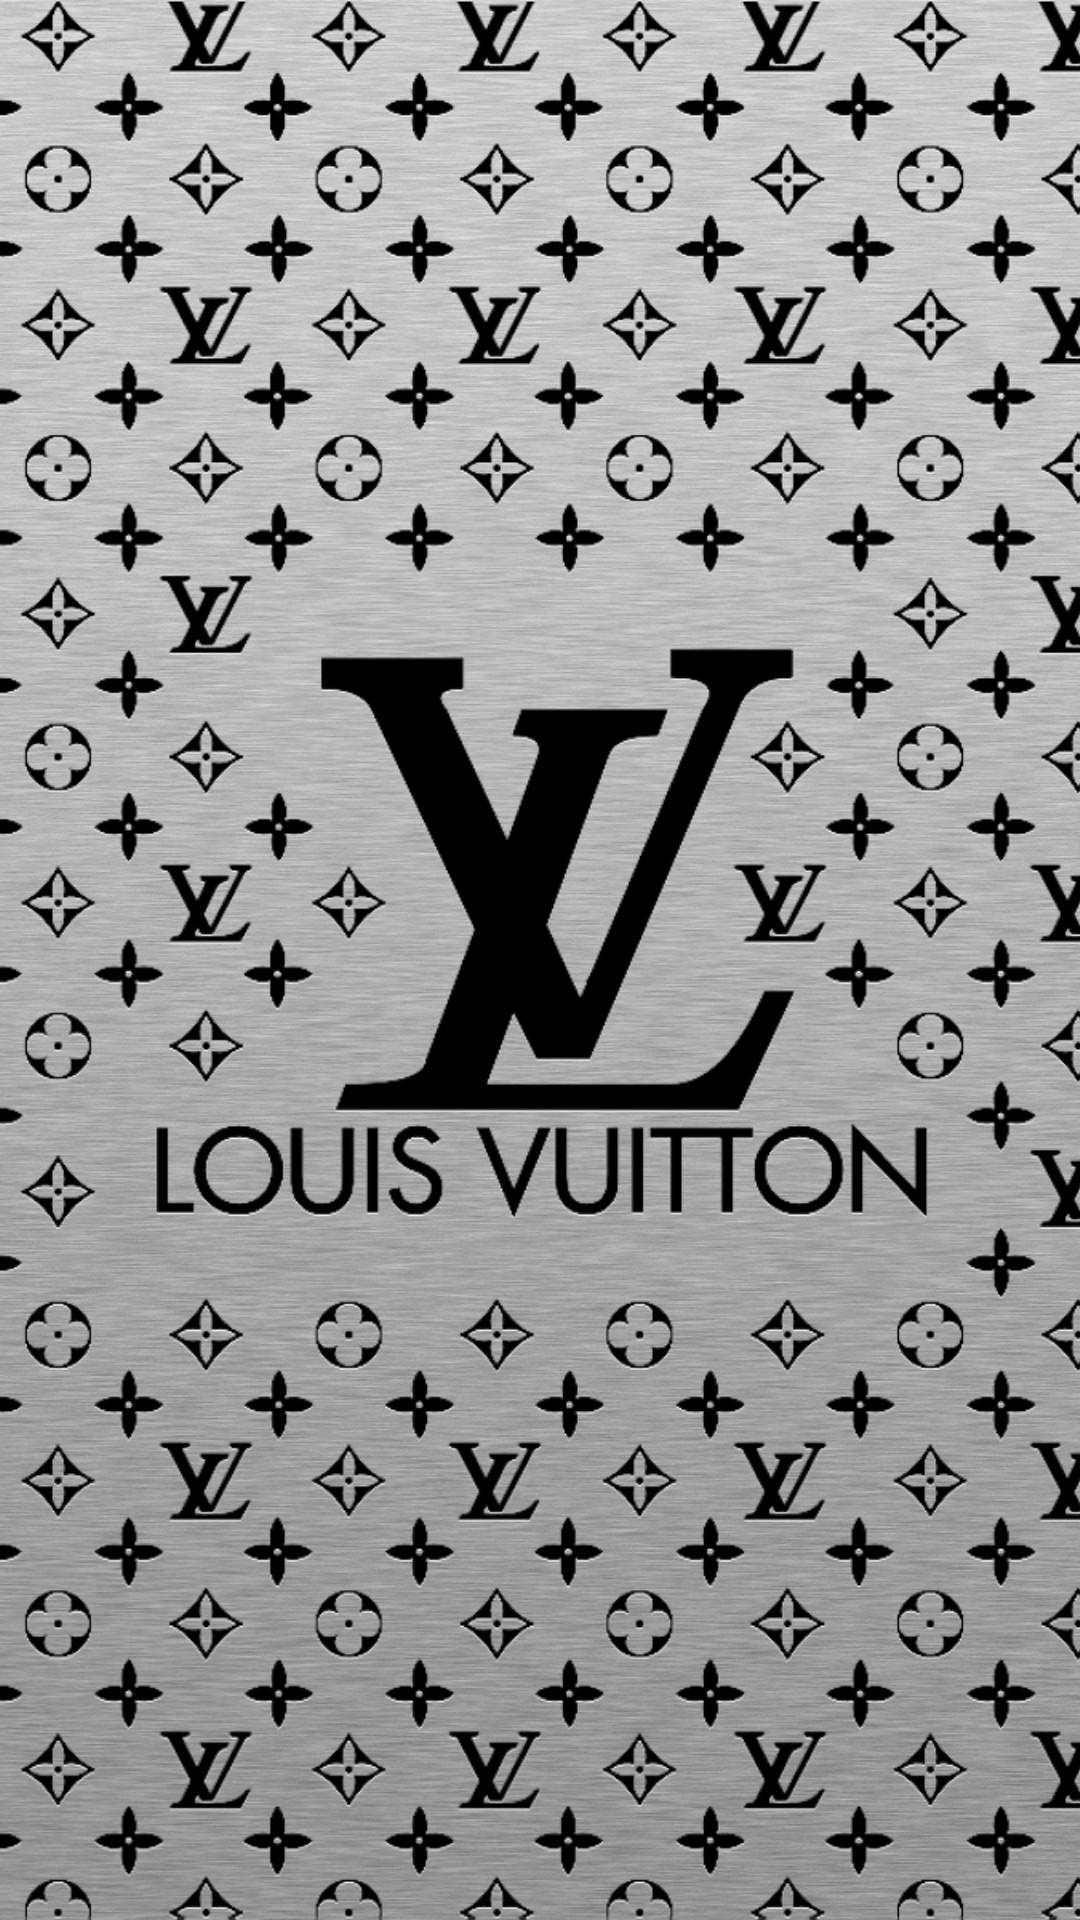 louisvuitton i20 - LOUIS VUITTON[ルイ・ヴィトン]の高画質スマホ壁紙20枚 [iPhone＆Androidに対応]